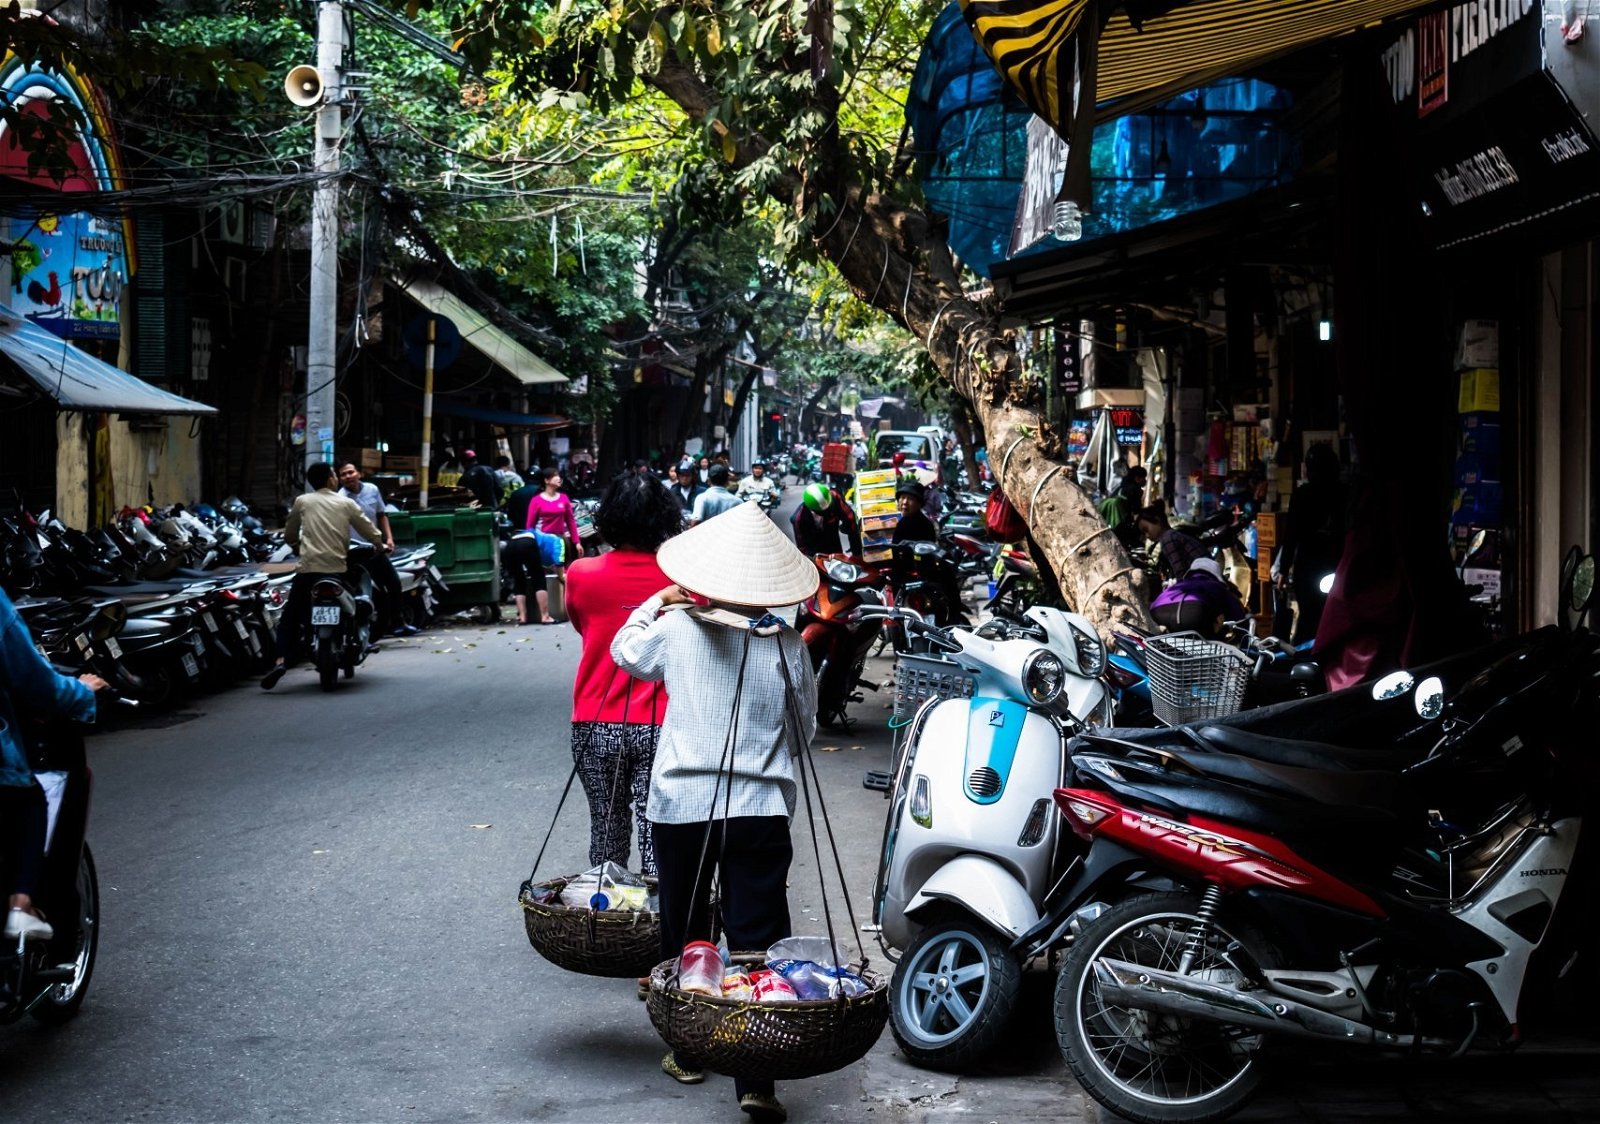 son vu le Q9Ndf qqjac unsplash 1 - Hanoi Transportation | Getting Around Vietnam's Capital